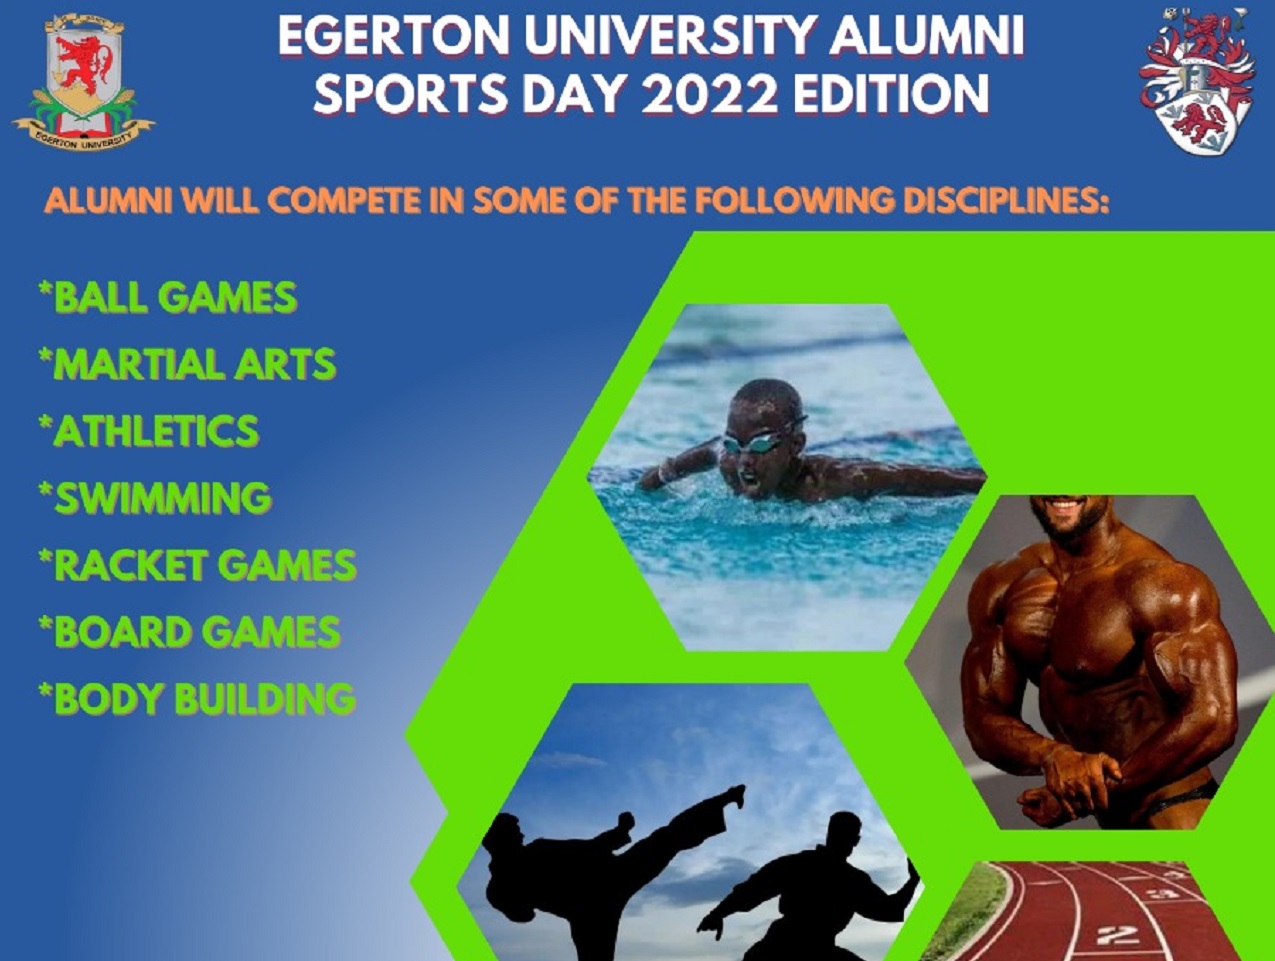 Alumni sports day for Egerton University in 2022